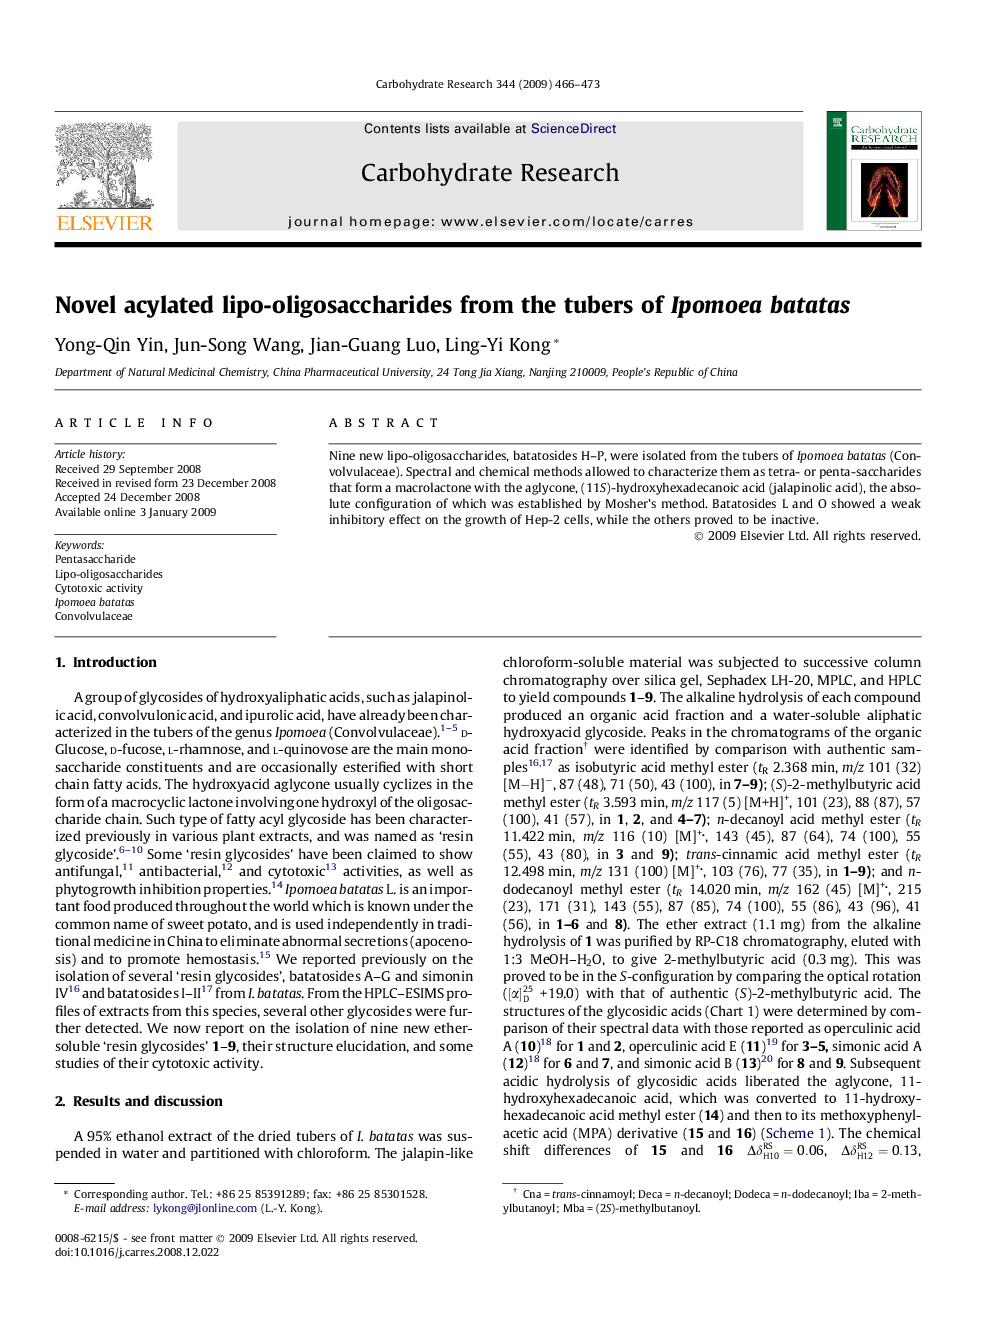 Novel acylated lipo-oligosaccharides from the tubers of Ipomoea batatas